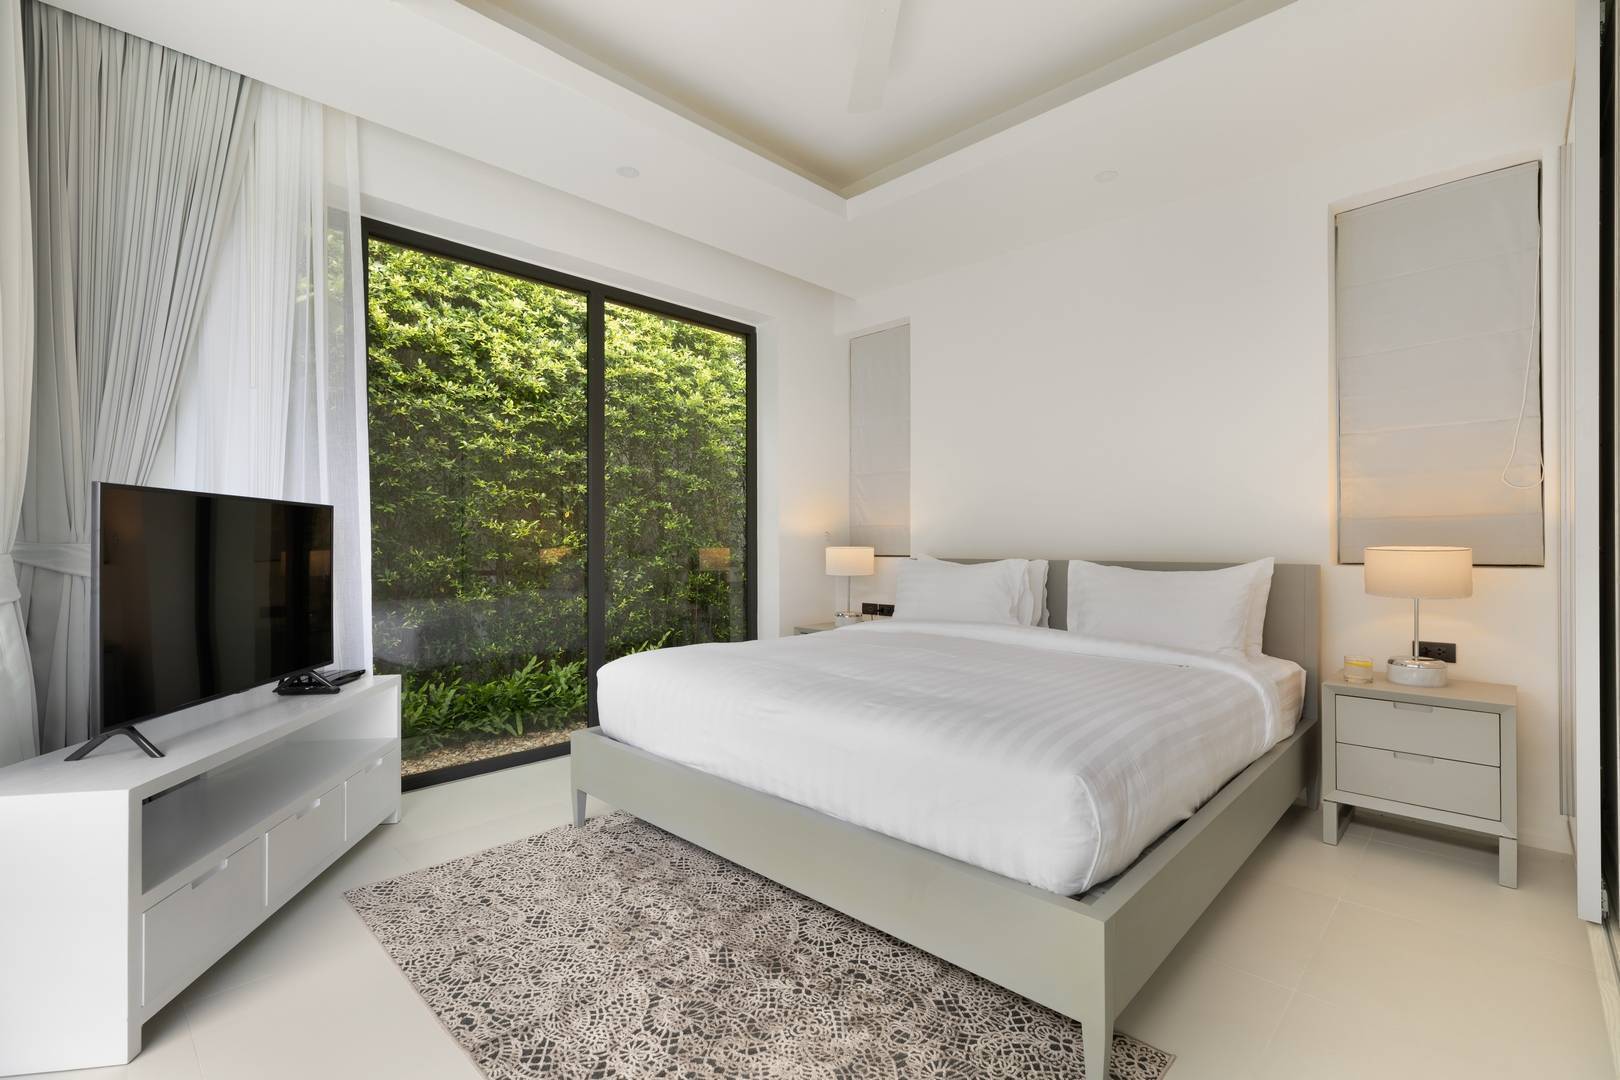 3 bedroom Villa Paradise for rent in Sunway Villas : 3 bedroom Villa Paradise for rent in Sunway Villas 